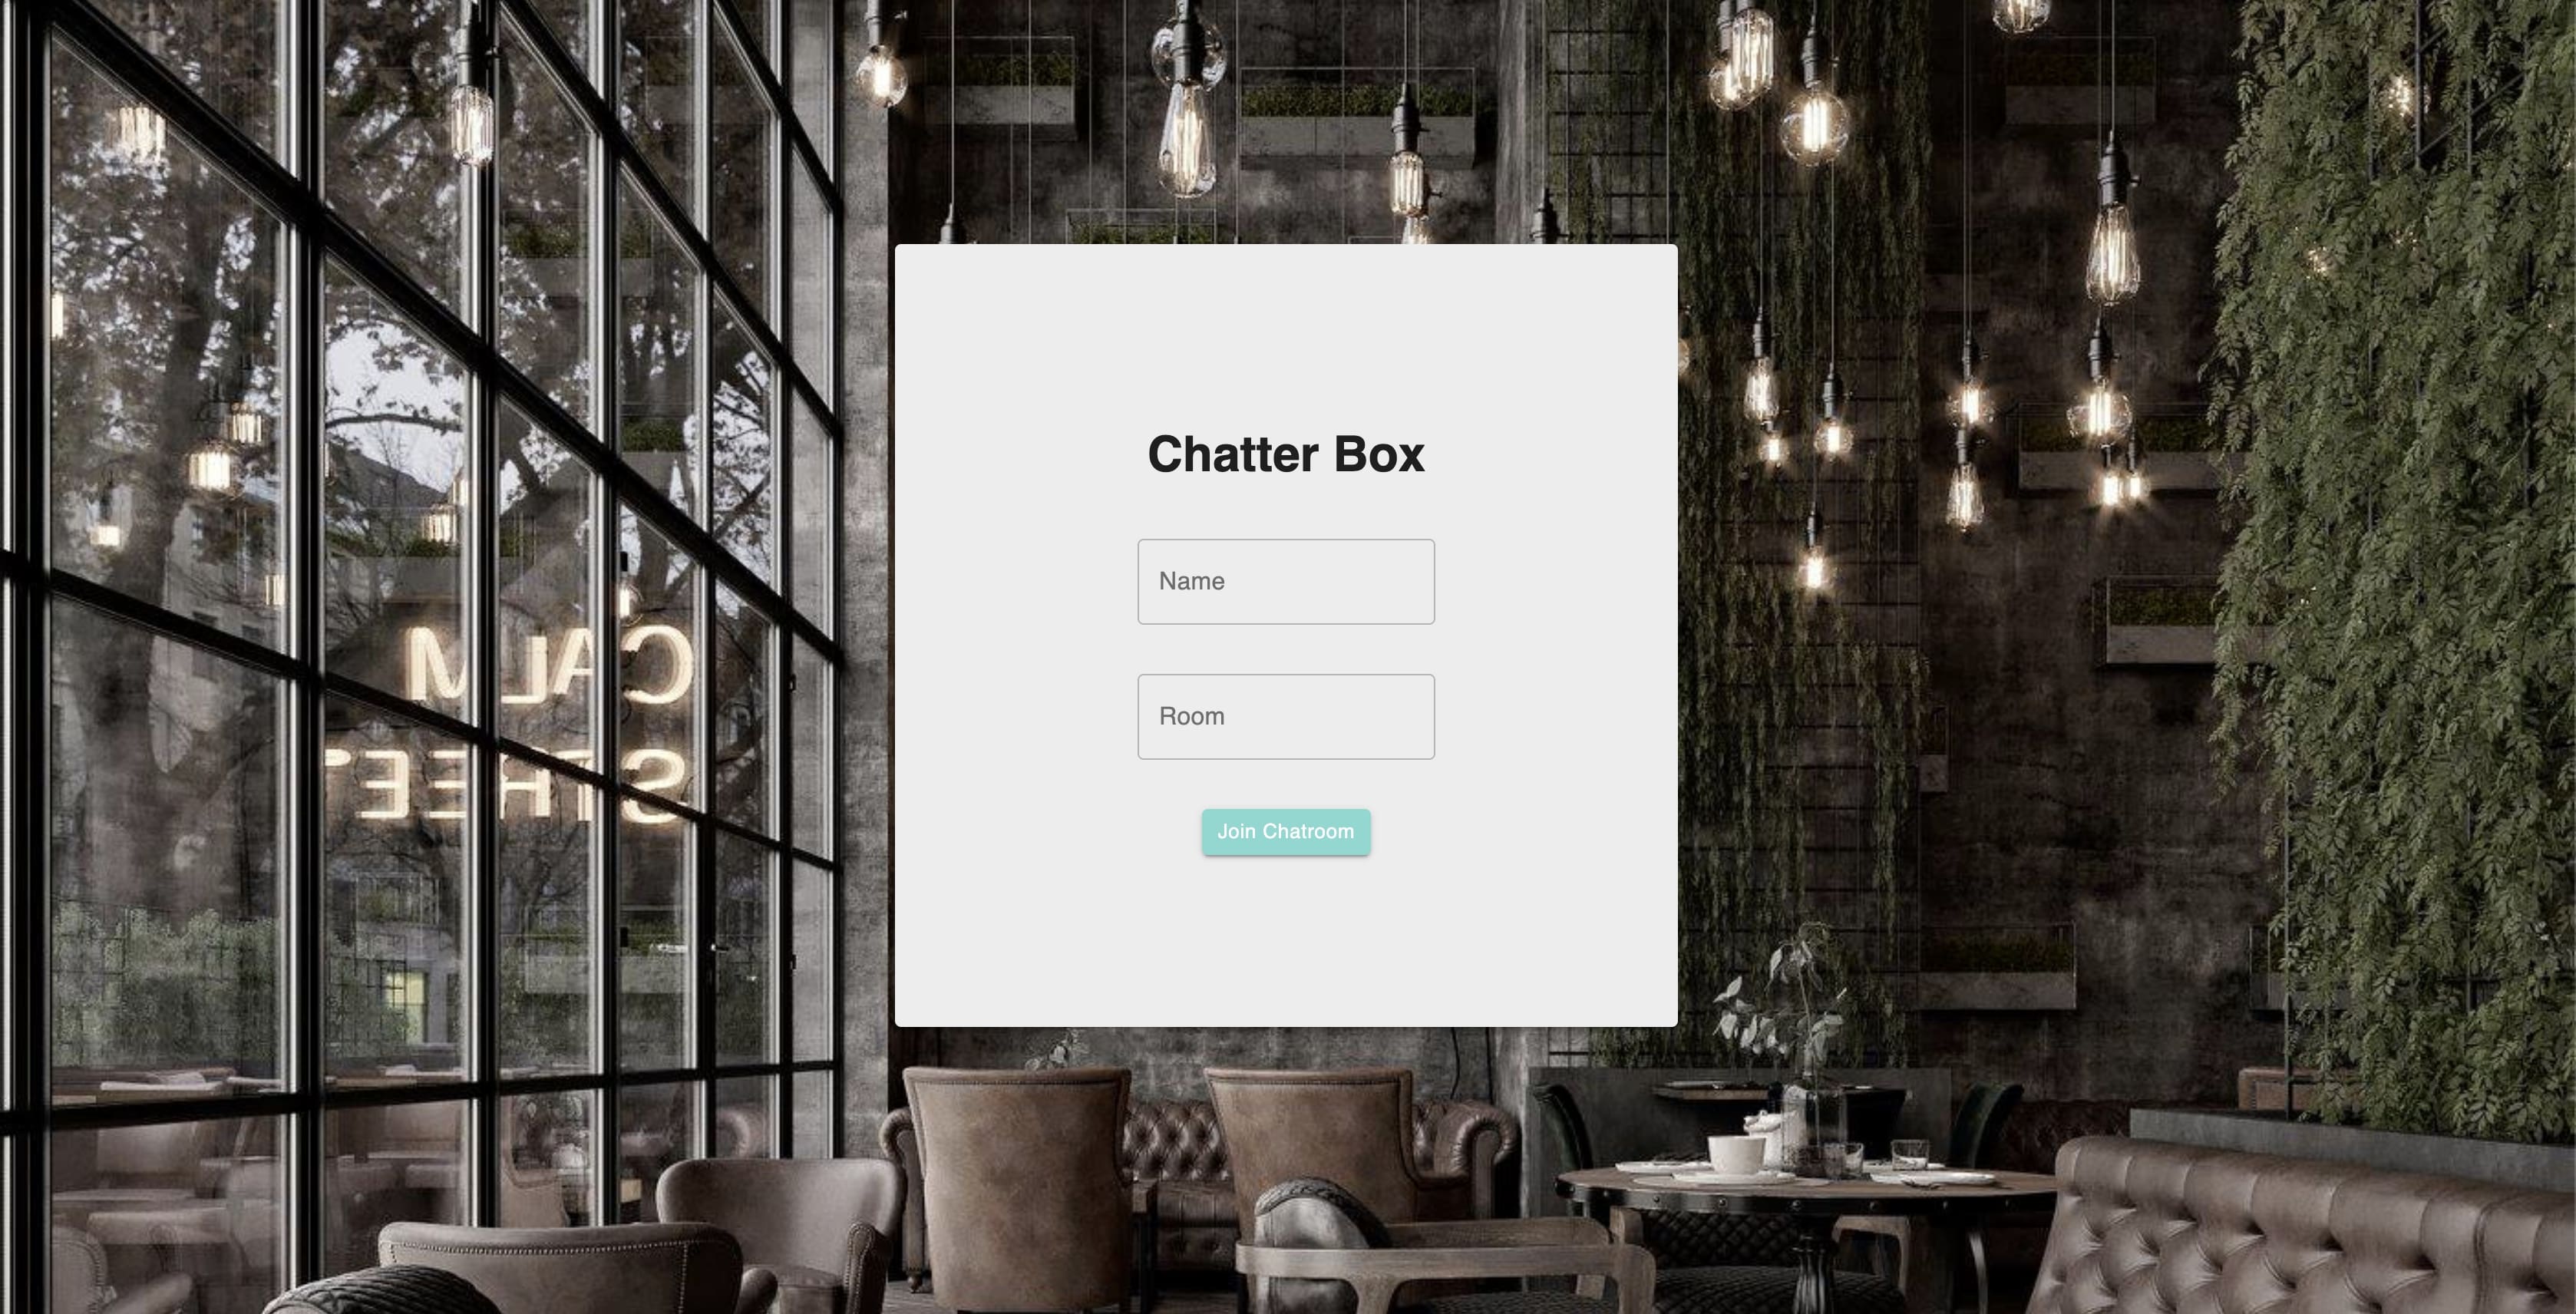 Chatter Box Image